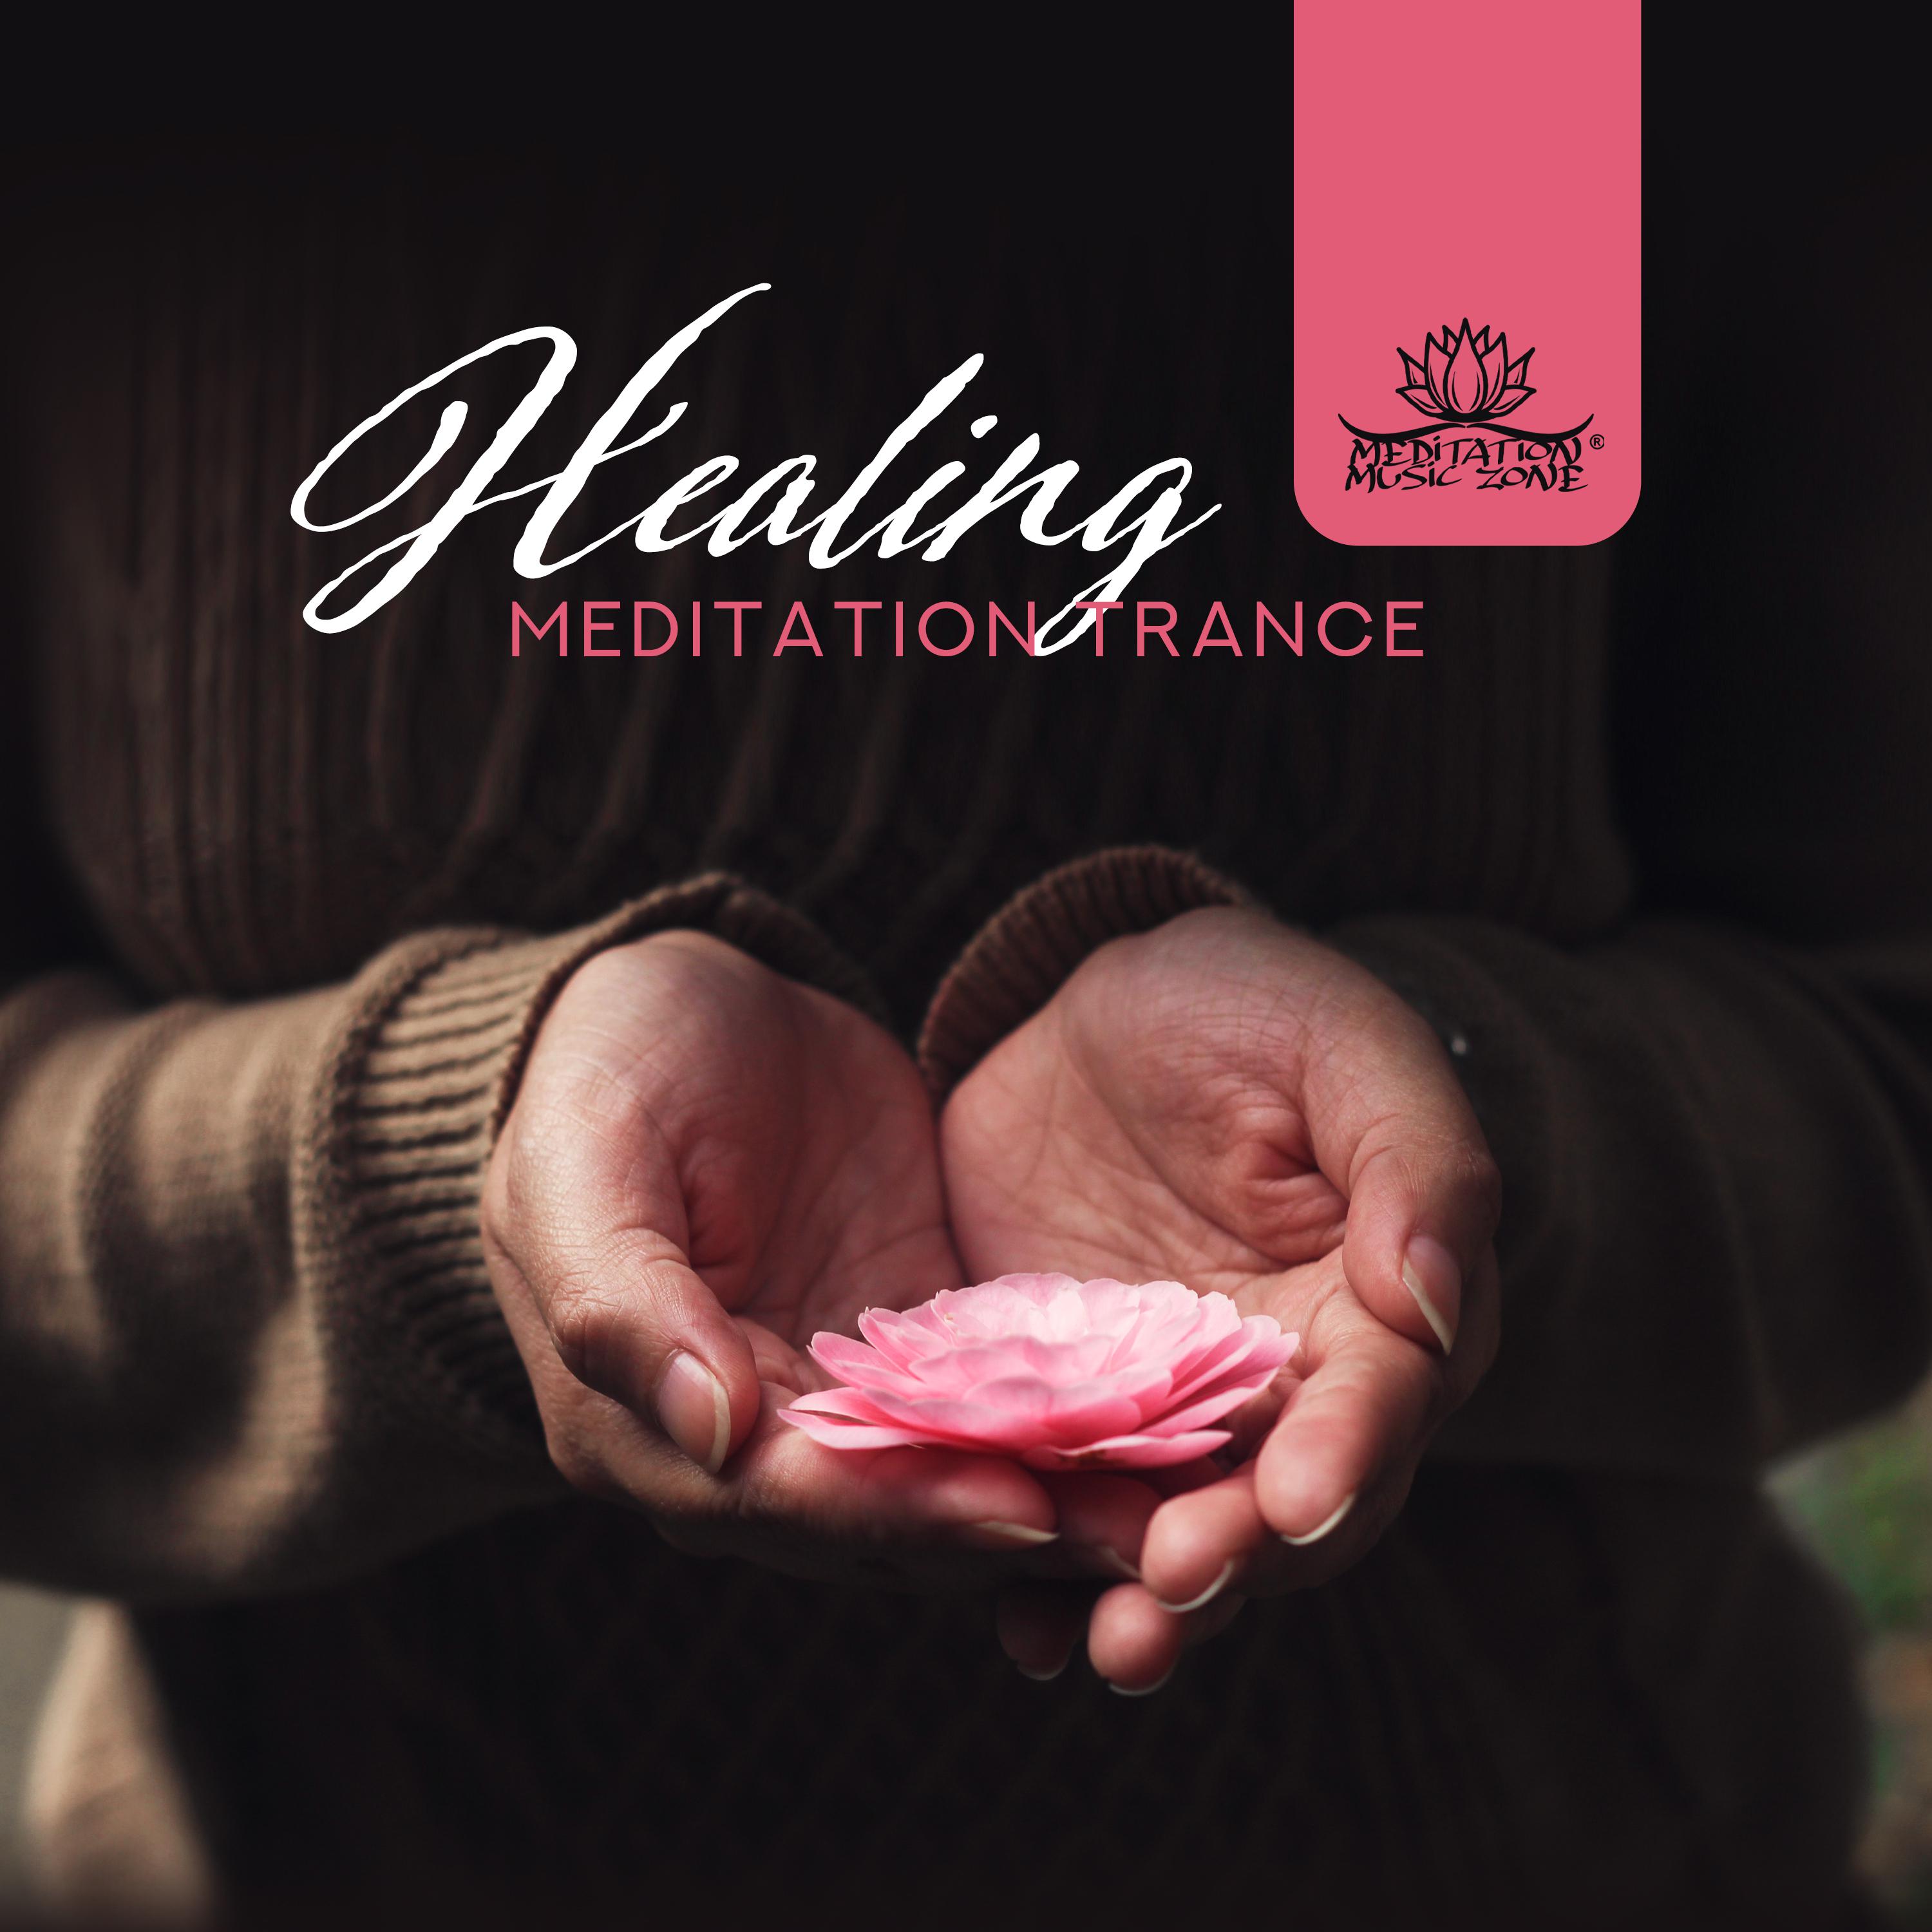 Healing Meditation Trance